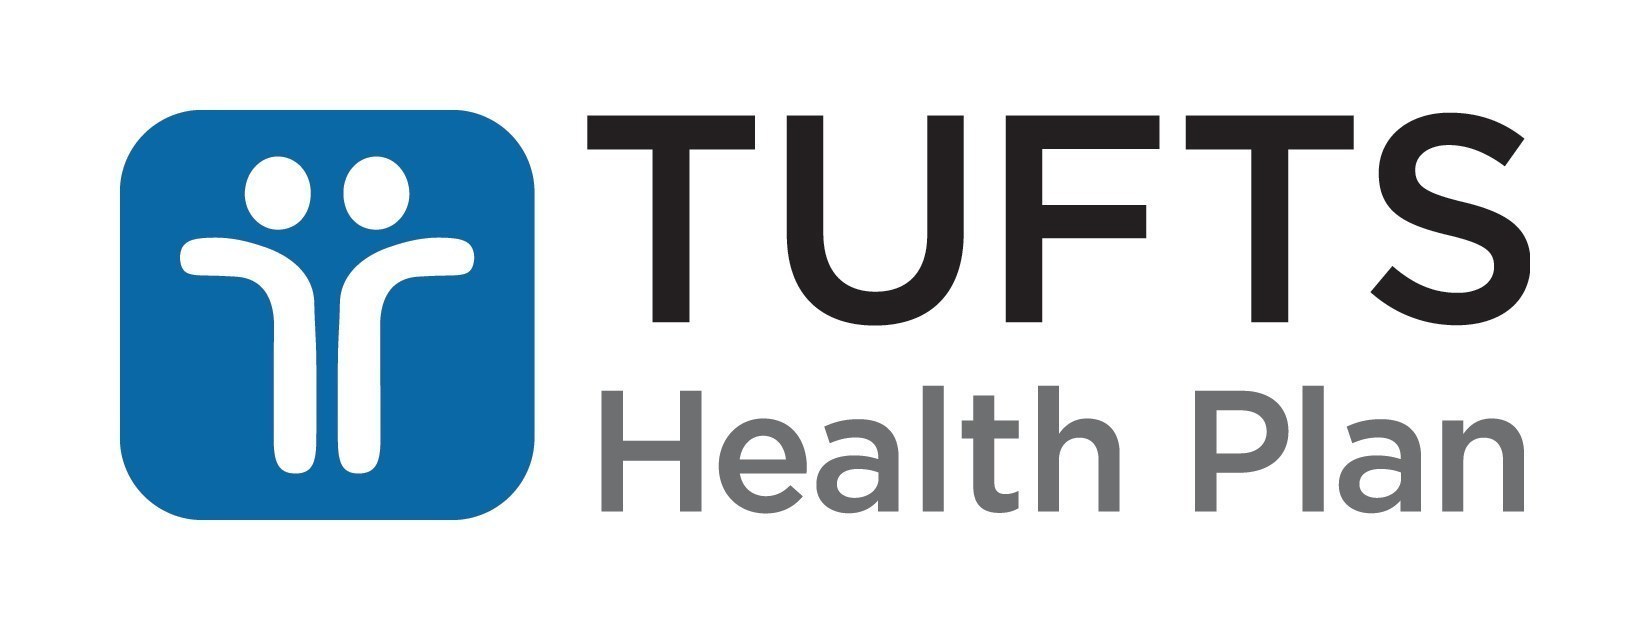 Tufts Health Plan Medicare Plans Earn 5 Stars the Highest Rating